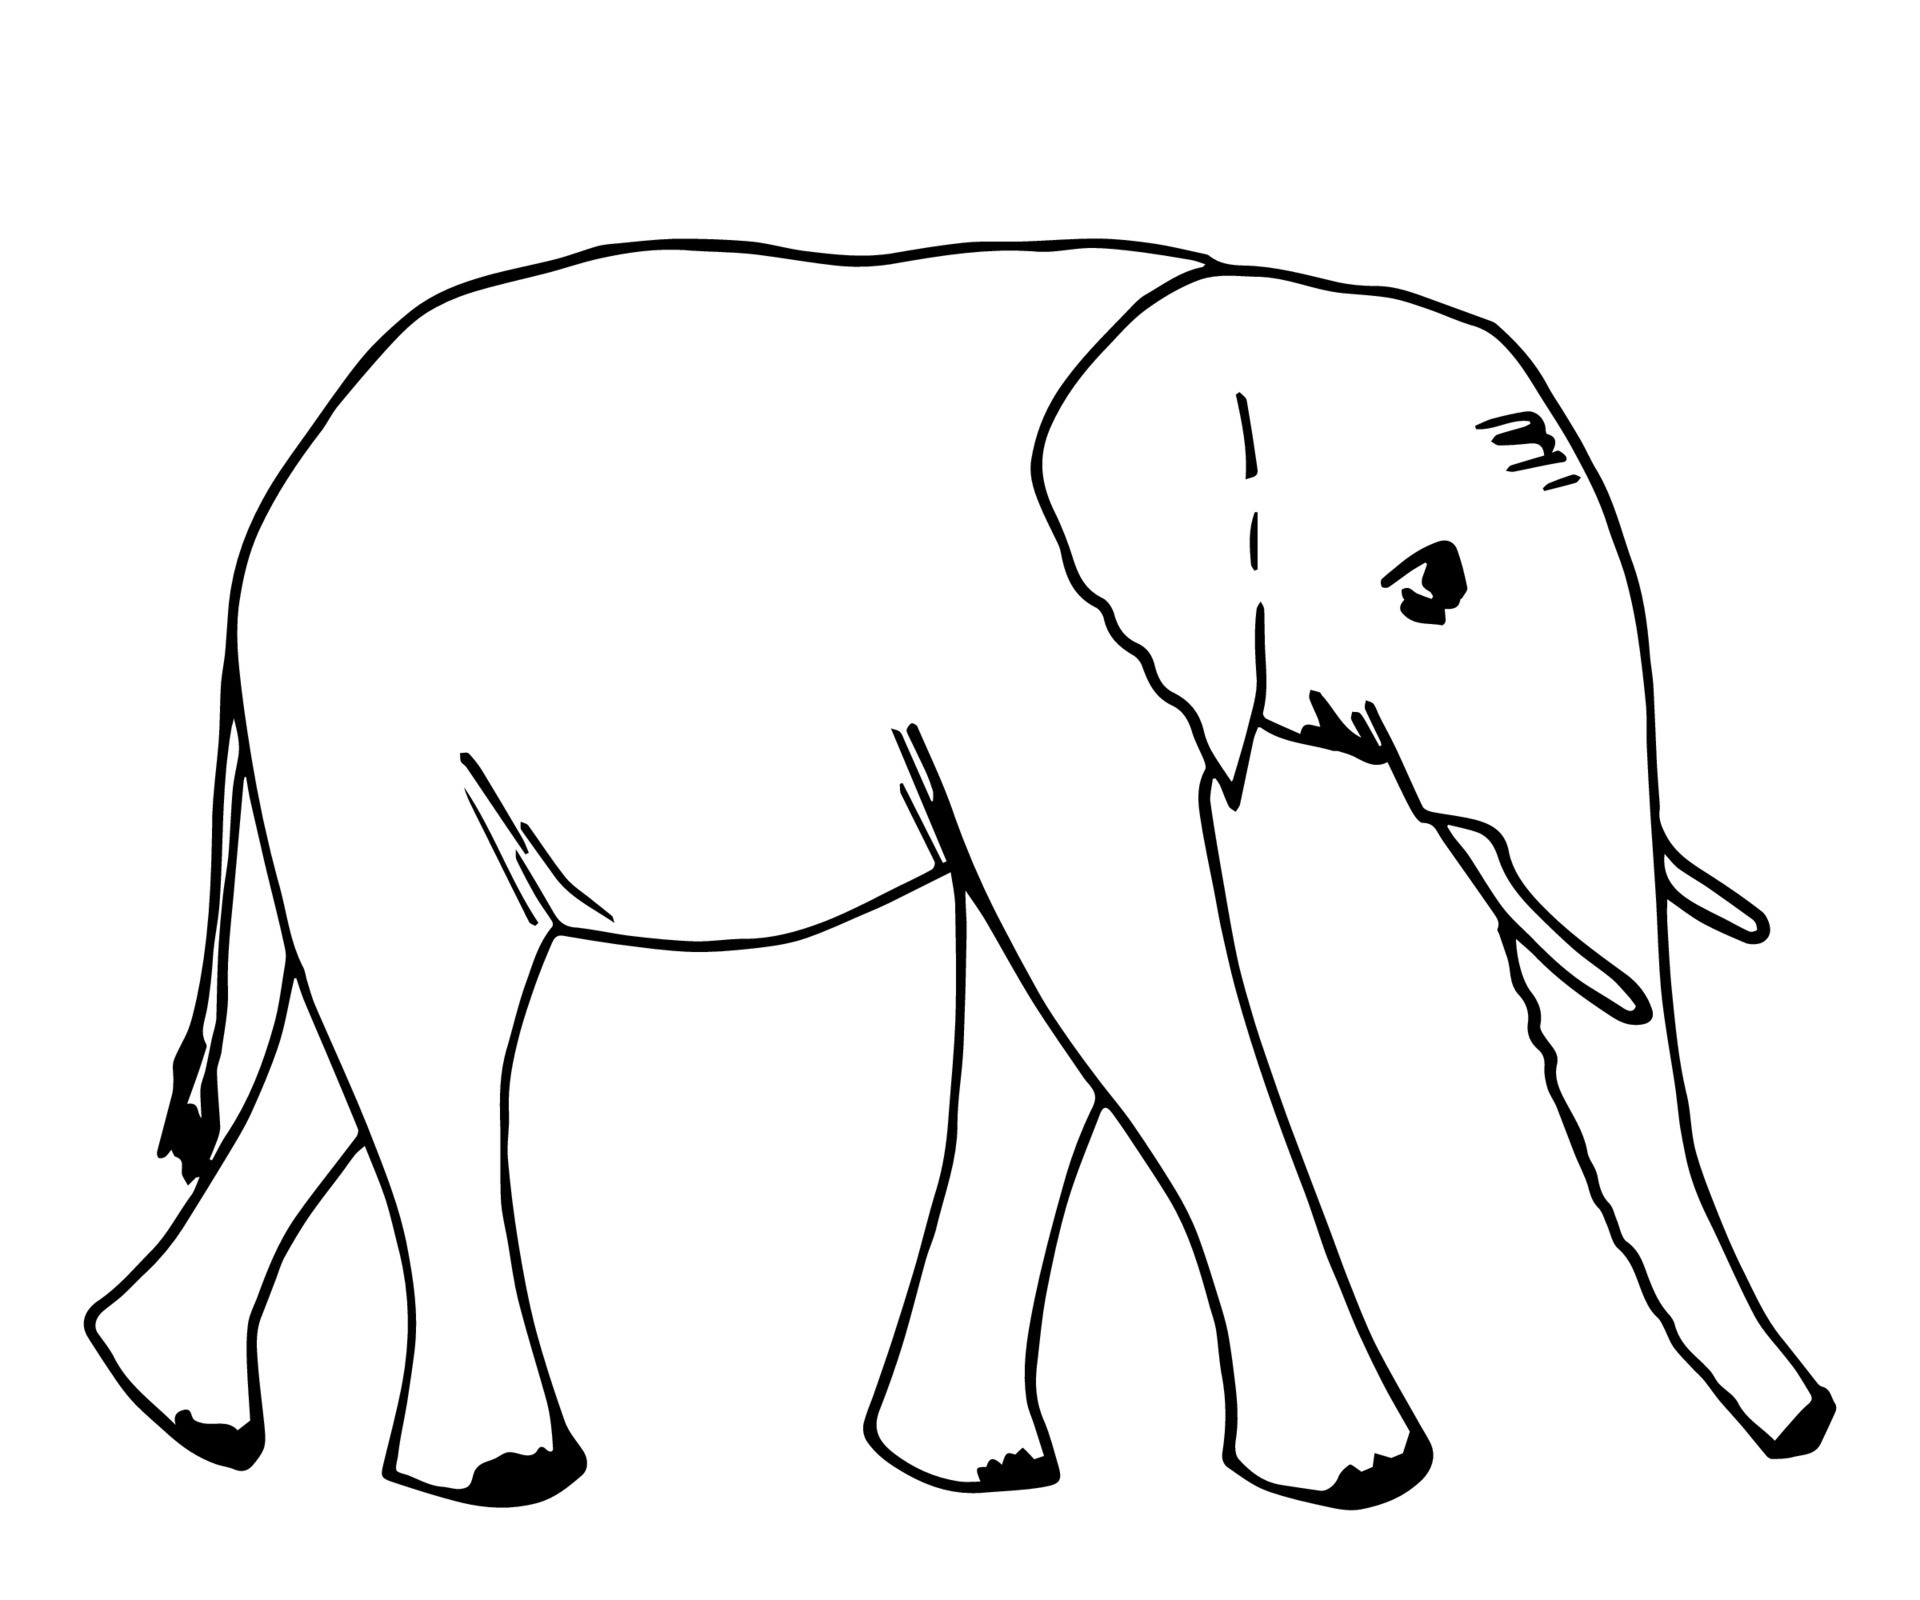 330 WildlifePencil ideas  wildlife animal drawings wildlife art